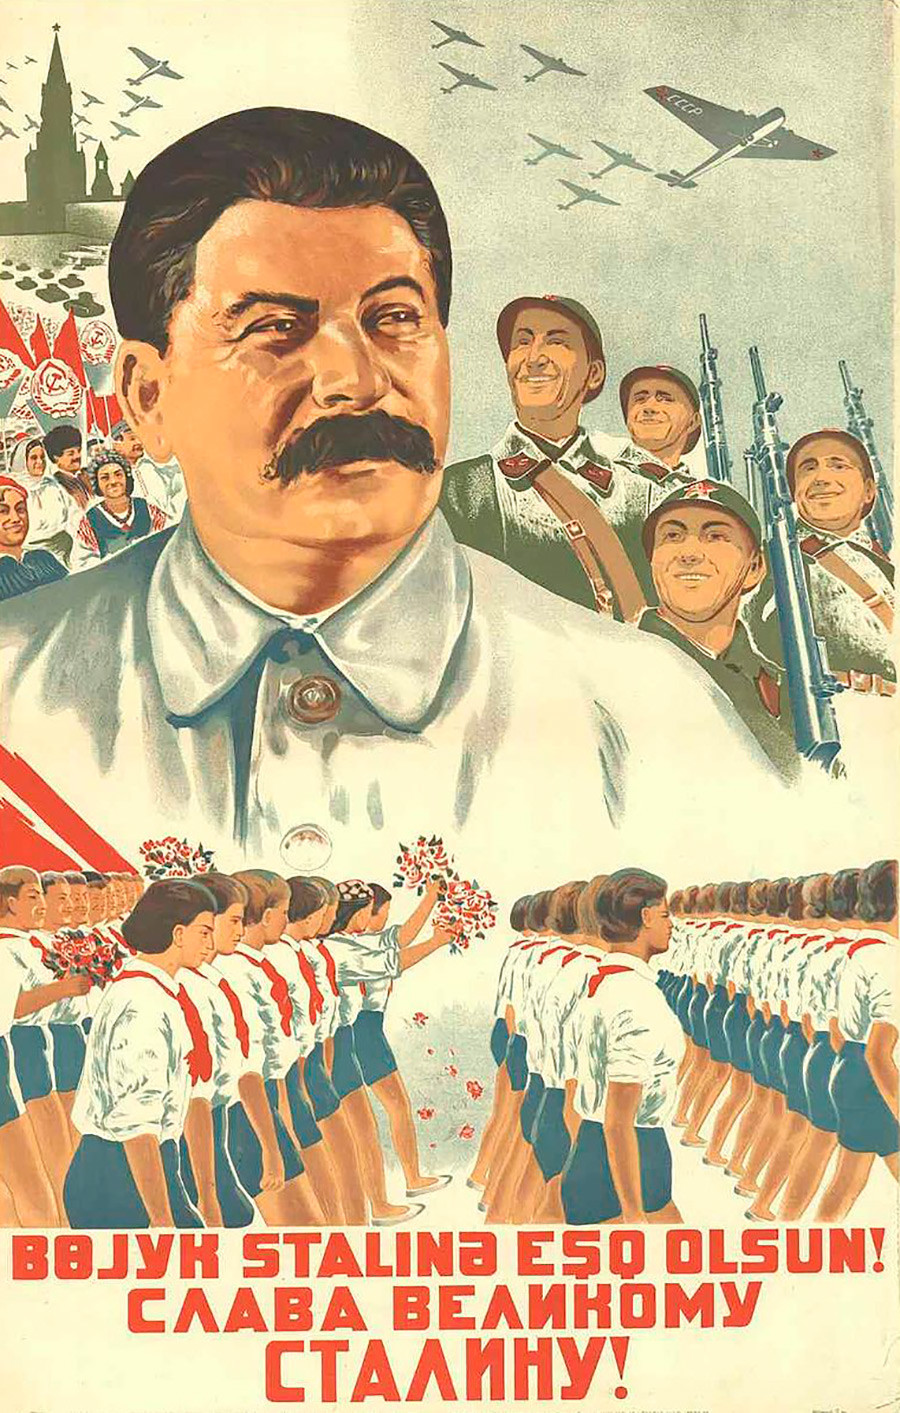 Azerbajdžanski plakat s Stalinom iz leta 1938

